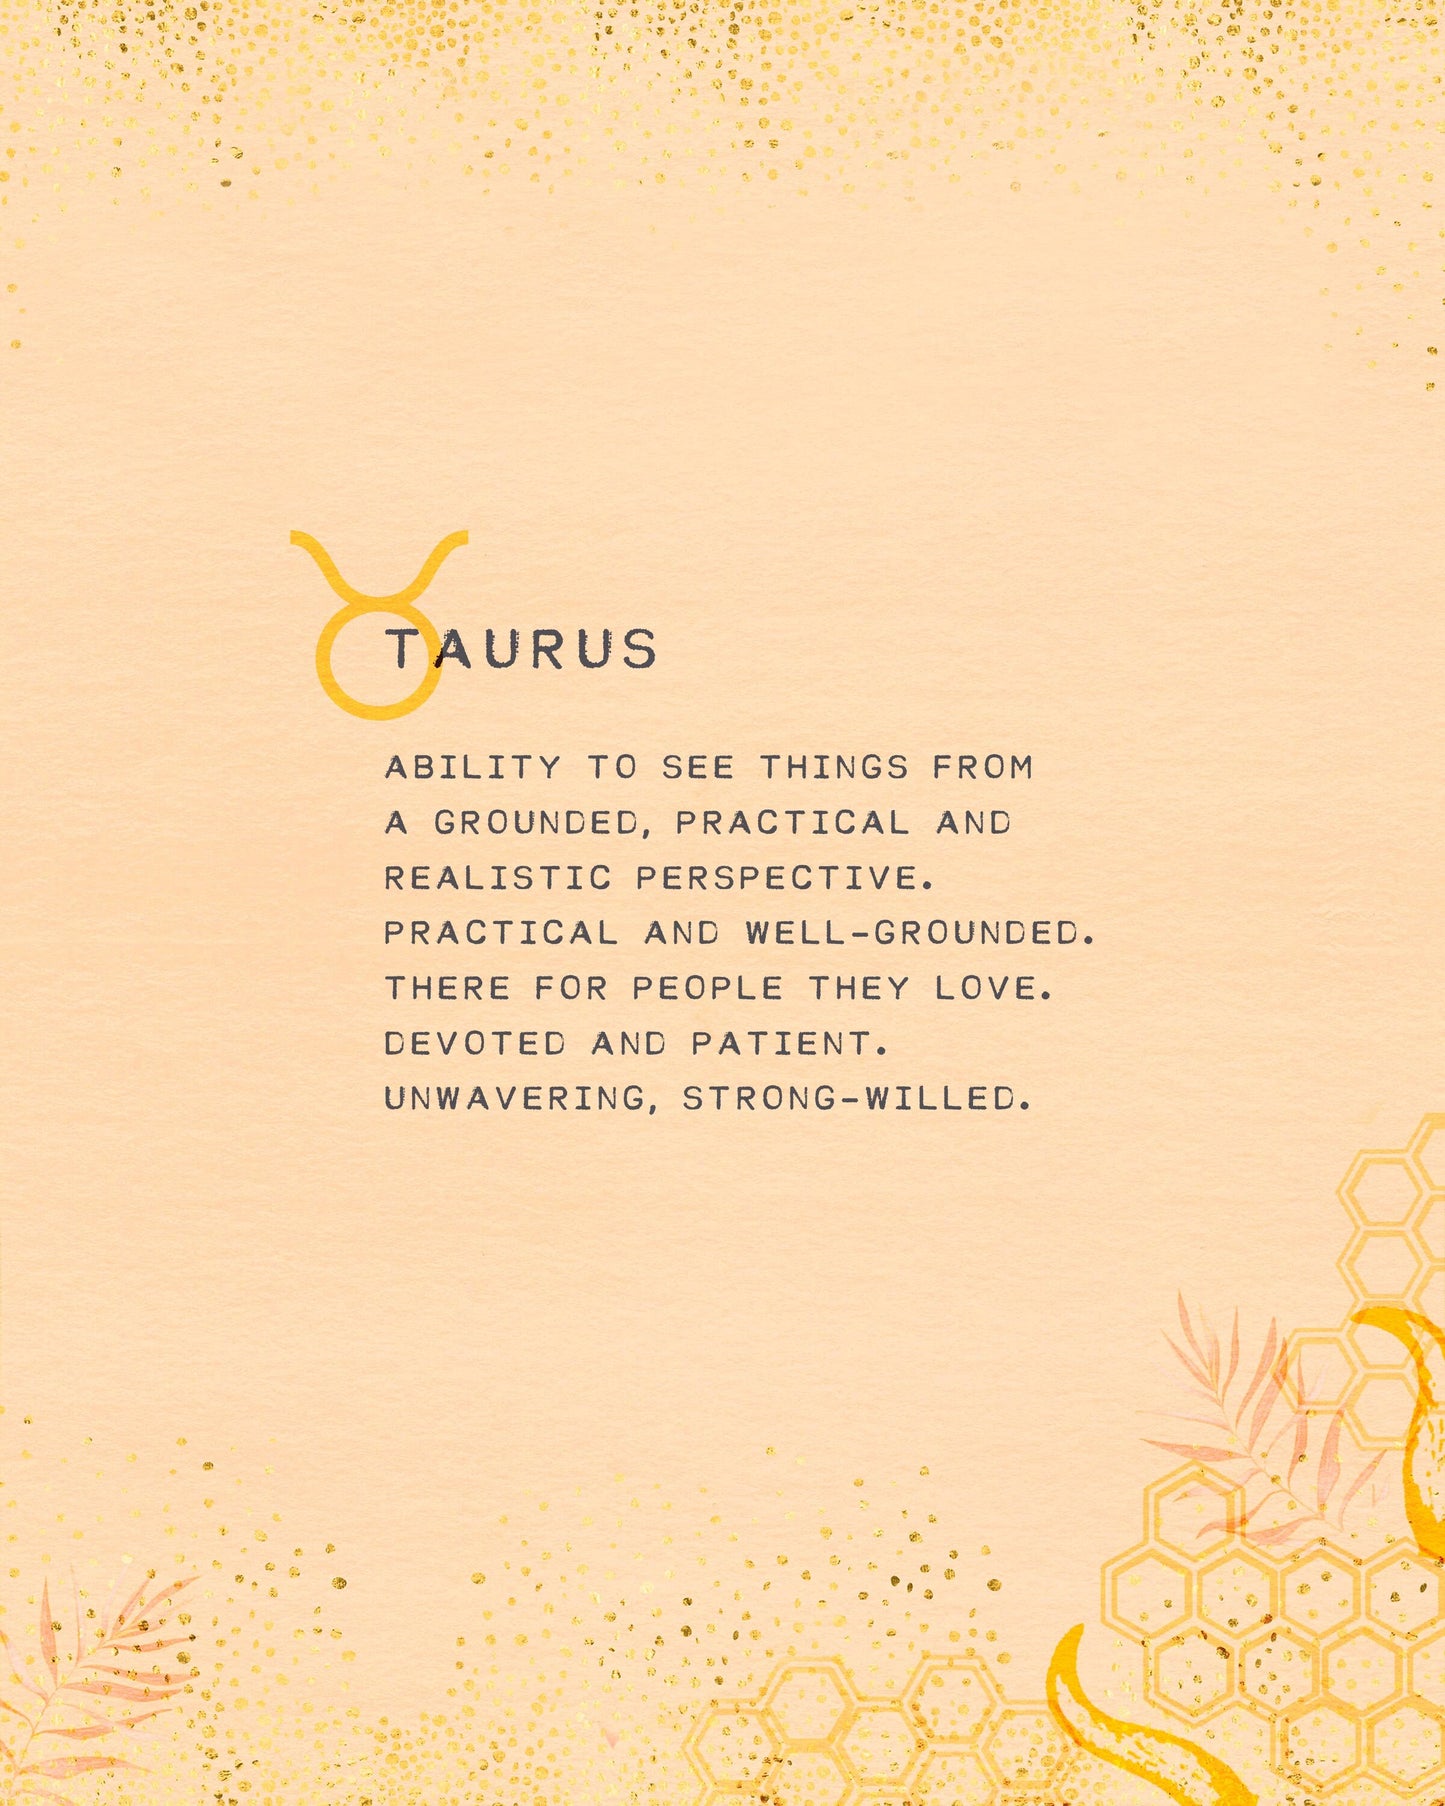 Taurus star sign art